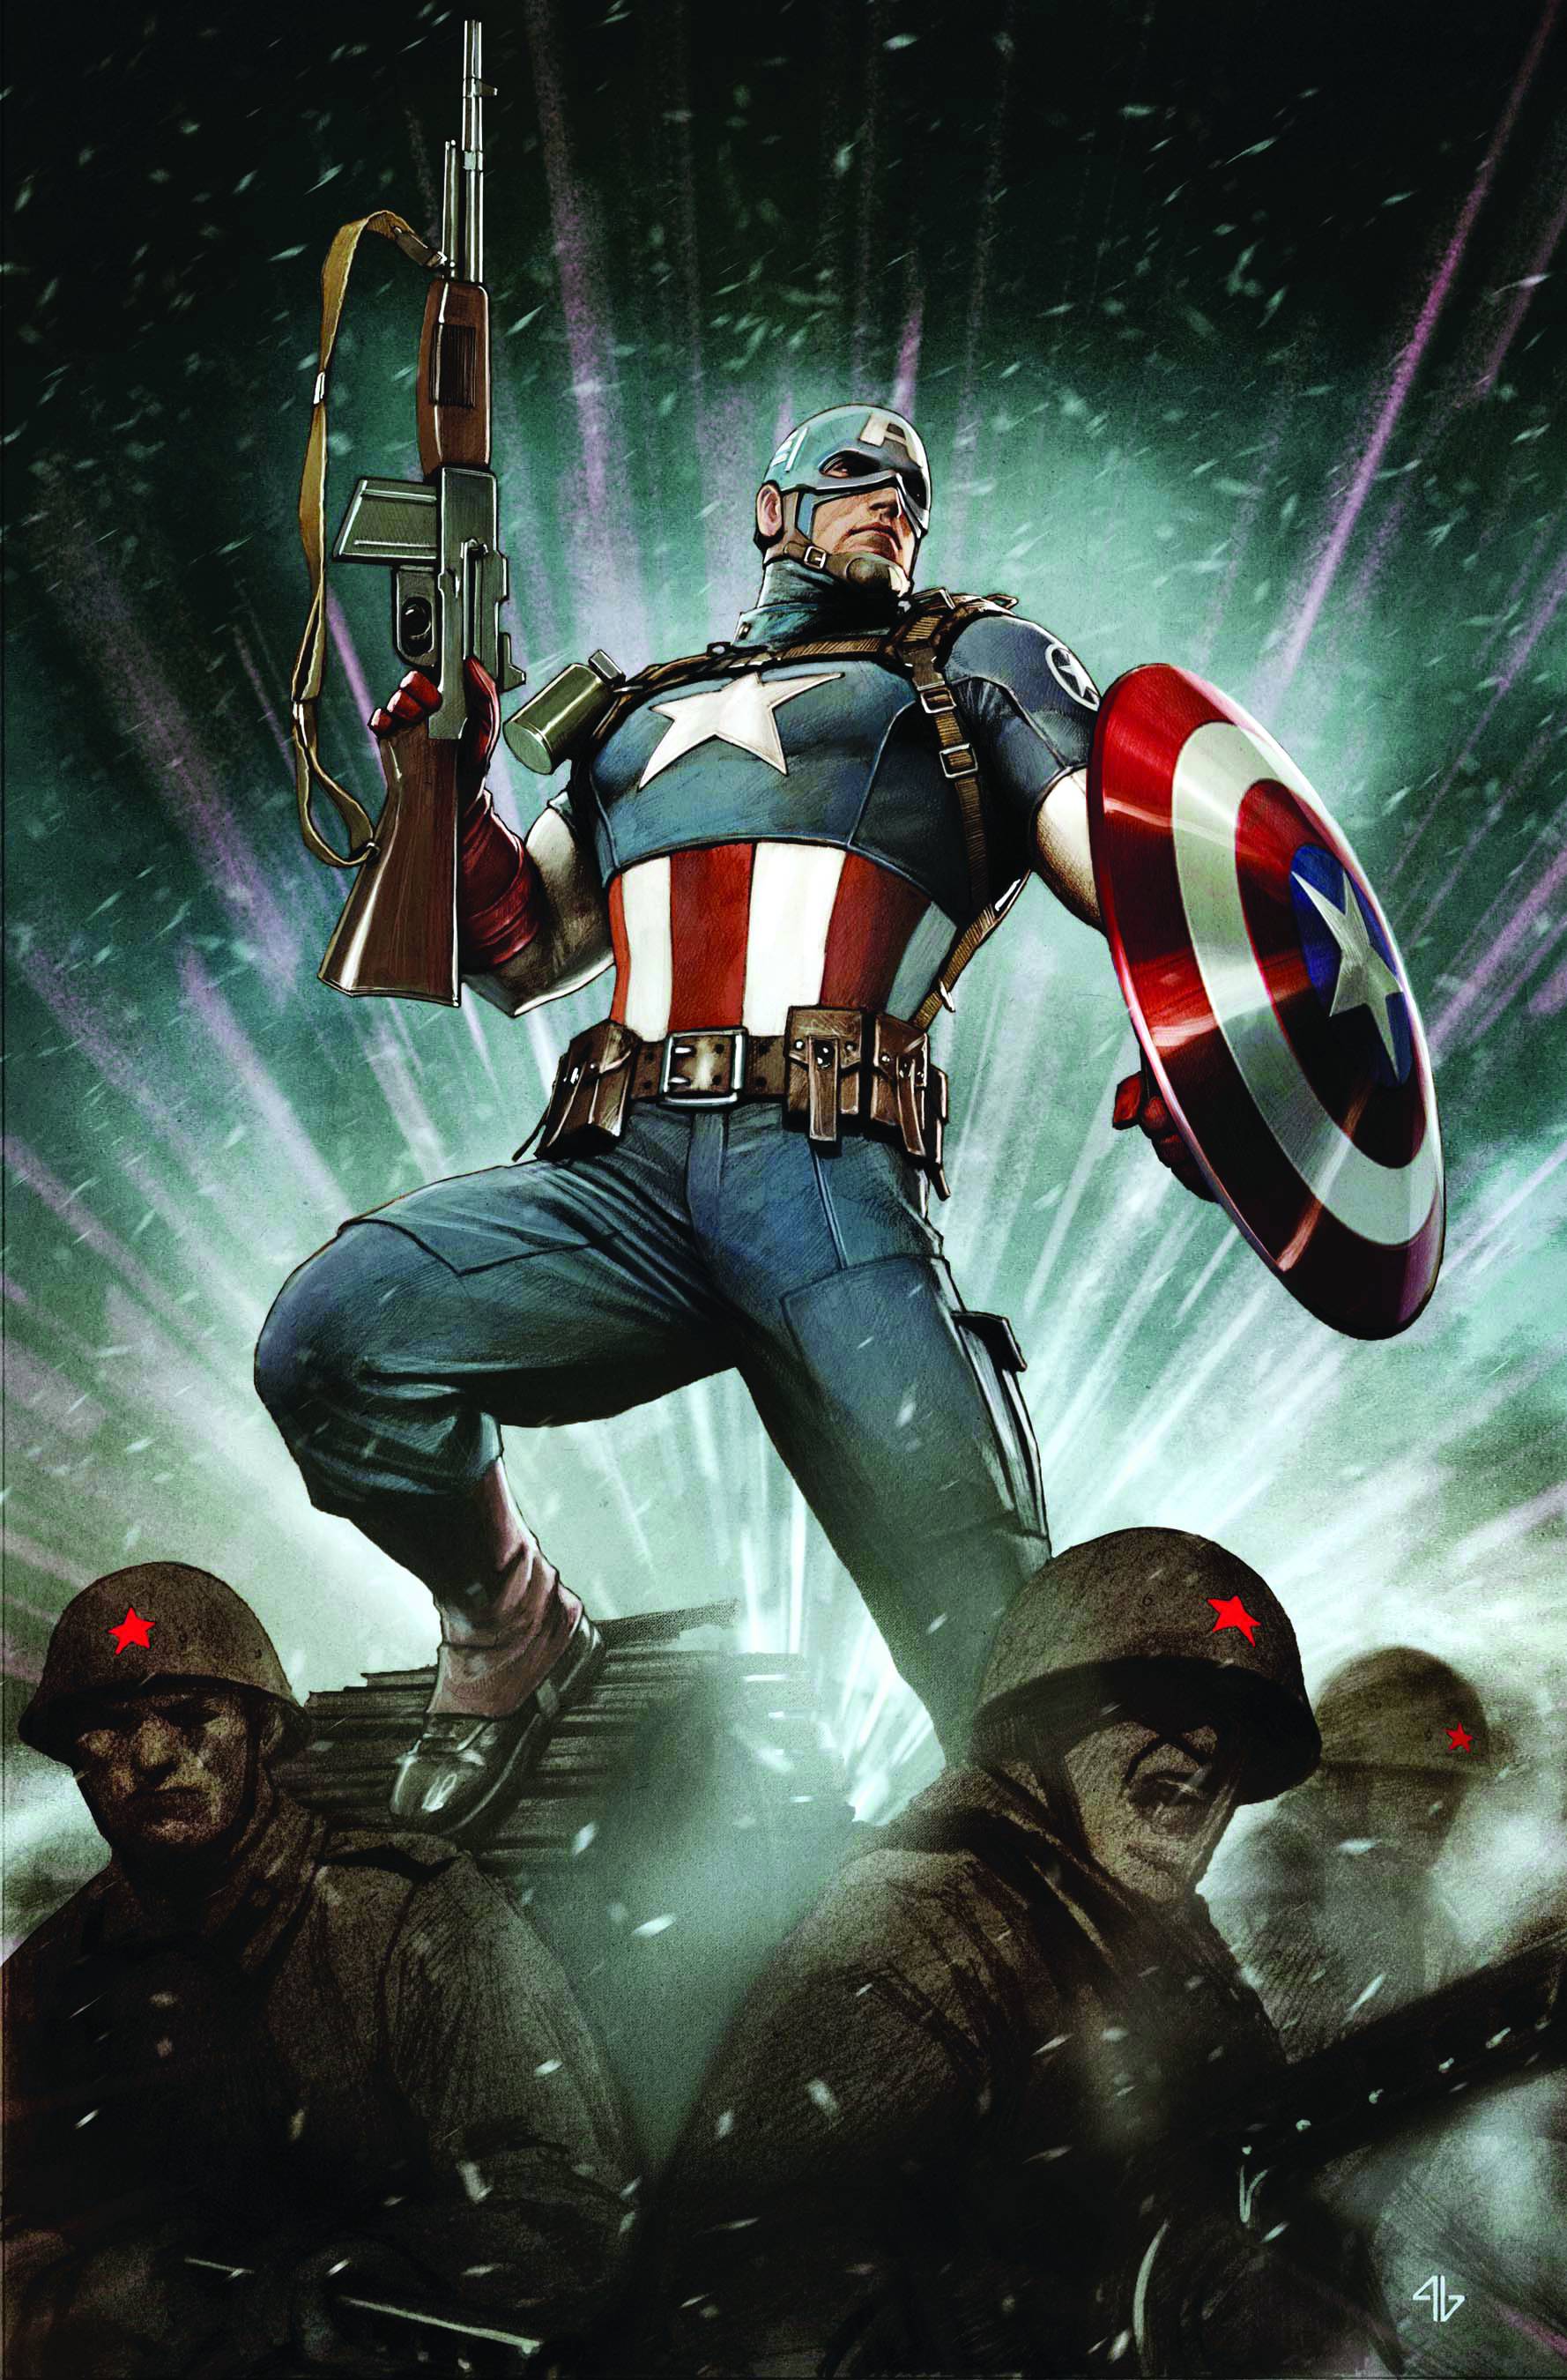 Captain America Living Legend #1